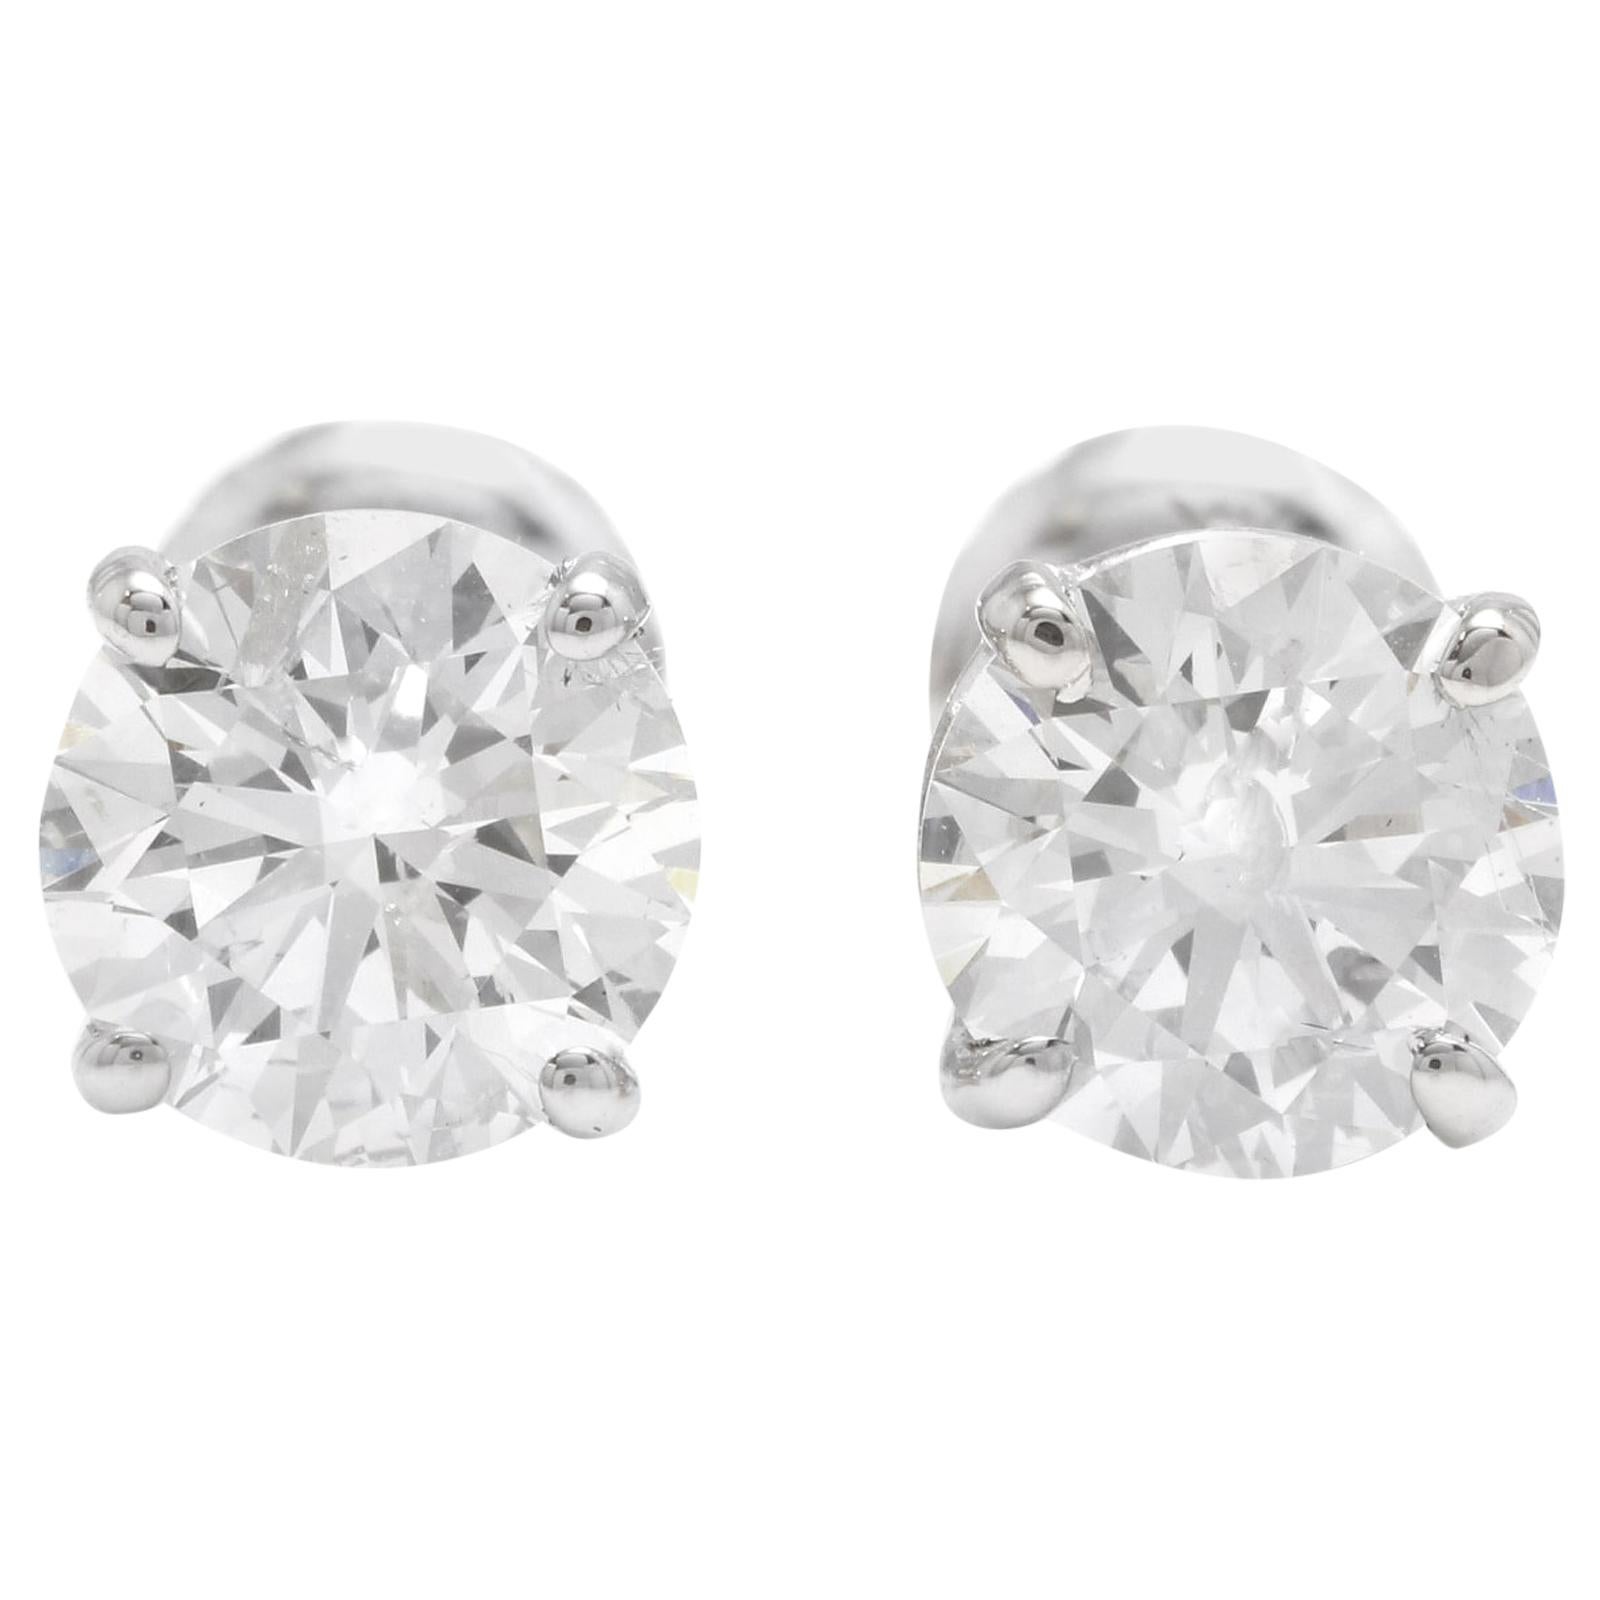 Exquisite 0.80 Carat Natural Diamond 14 Karat Solid White Gold Stud Earrings